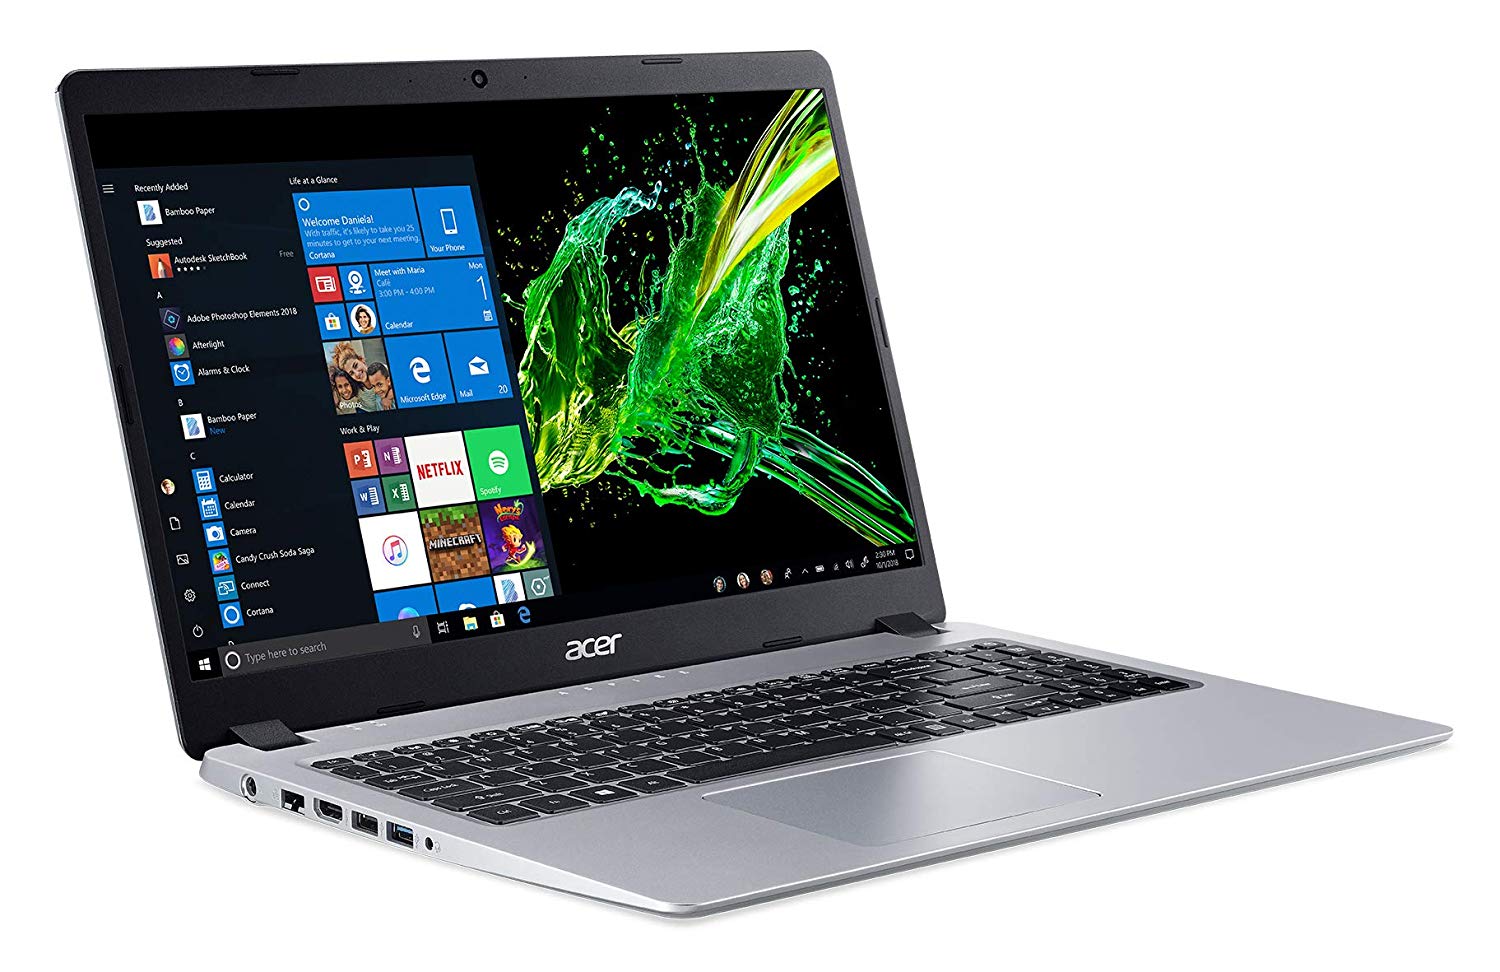 Acer Aspire 5 Slim Laptop, 15.6" Full HD IPS Display, AMD Ryzen 3 3200U, Vega 3 Graphics, 4GB DDR4, 128GB SSD, Backlit Keyboard, Windows 10 in S Mode, A515-43-R19L - image 1 of 7